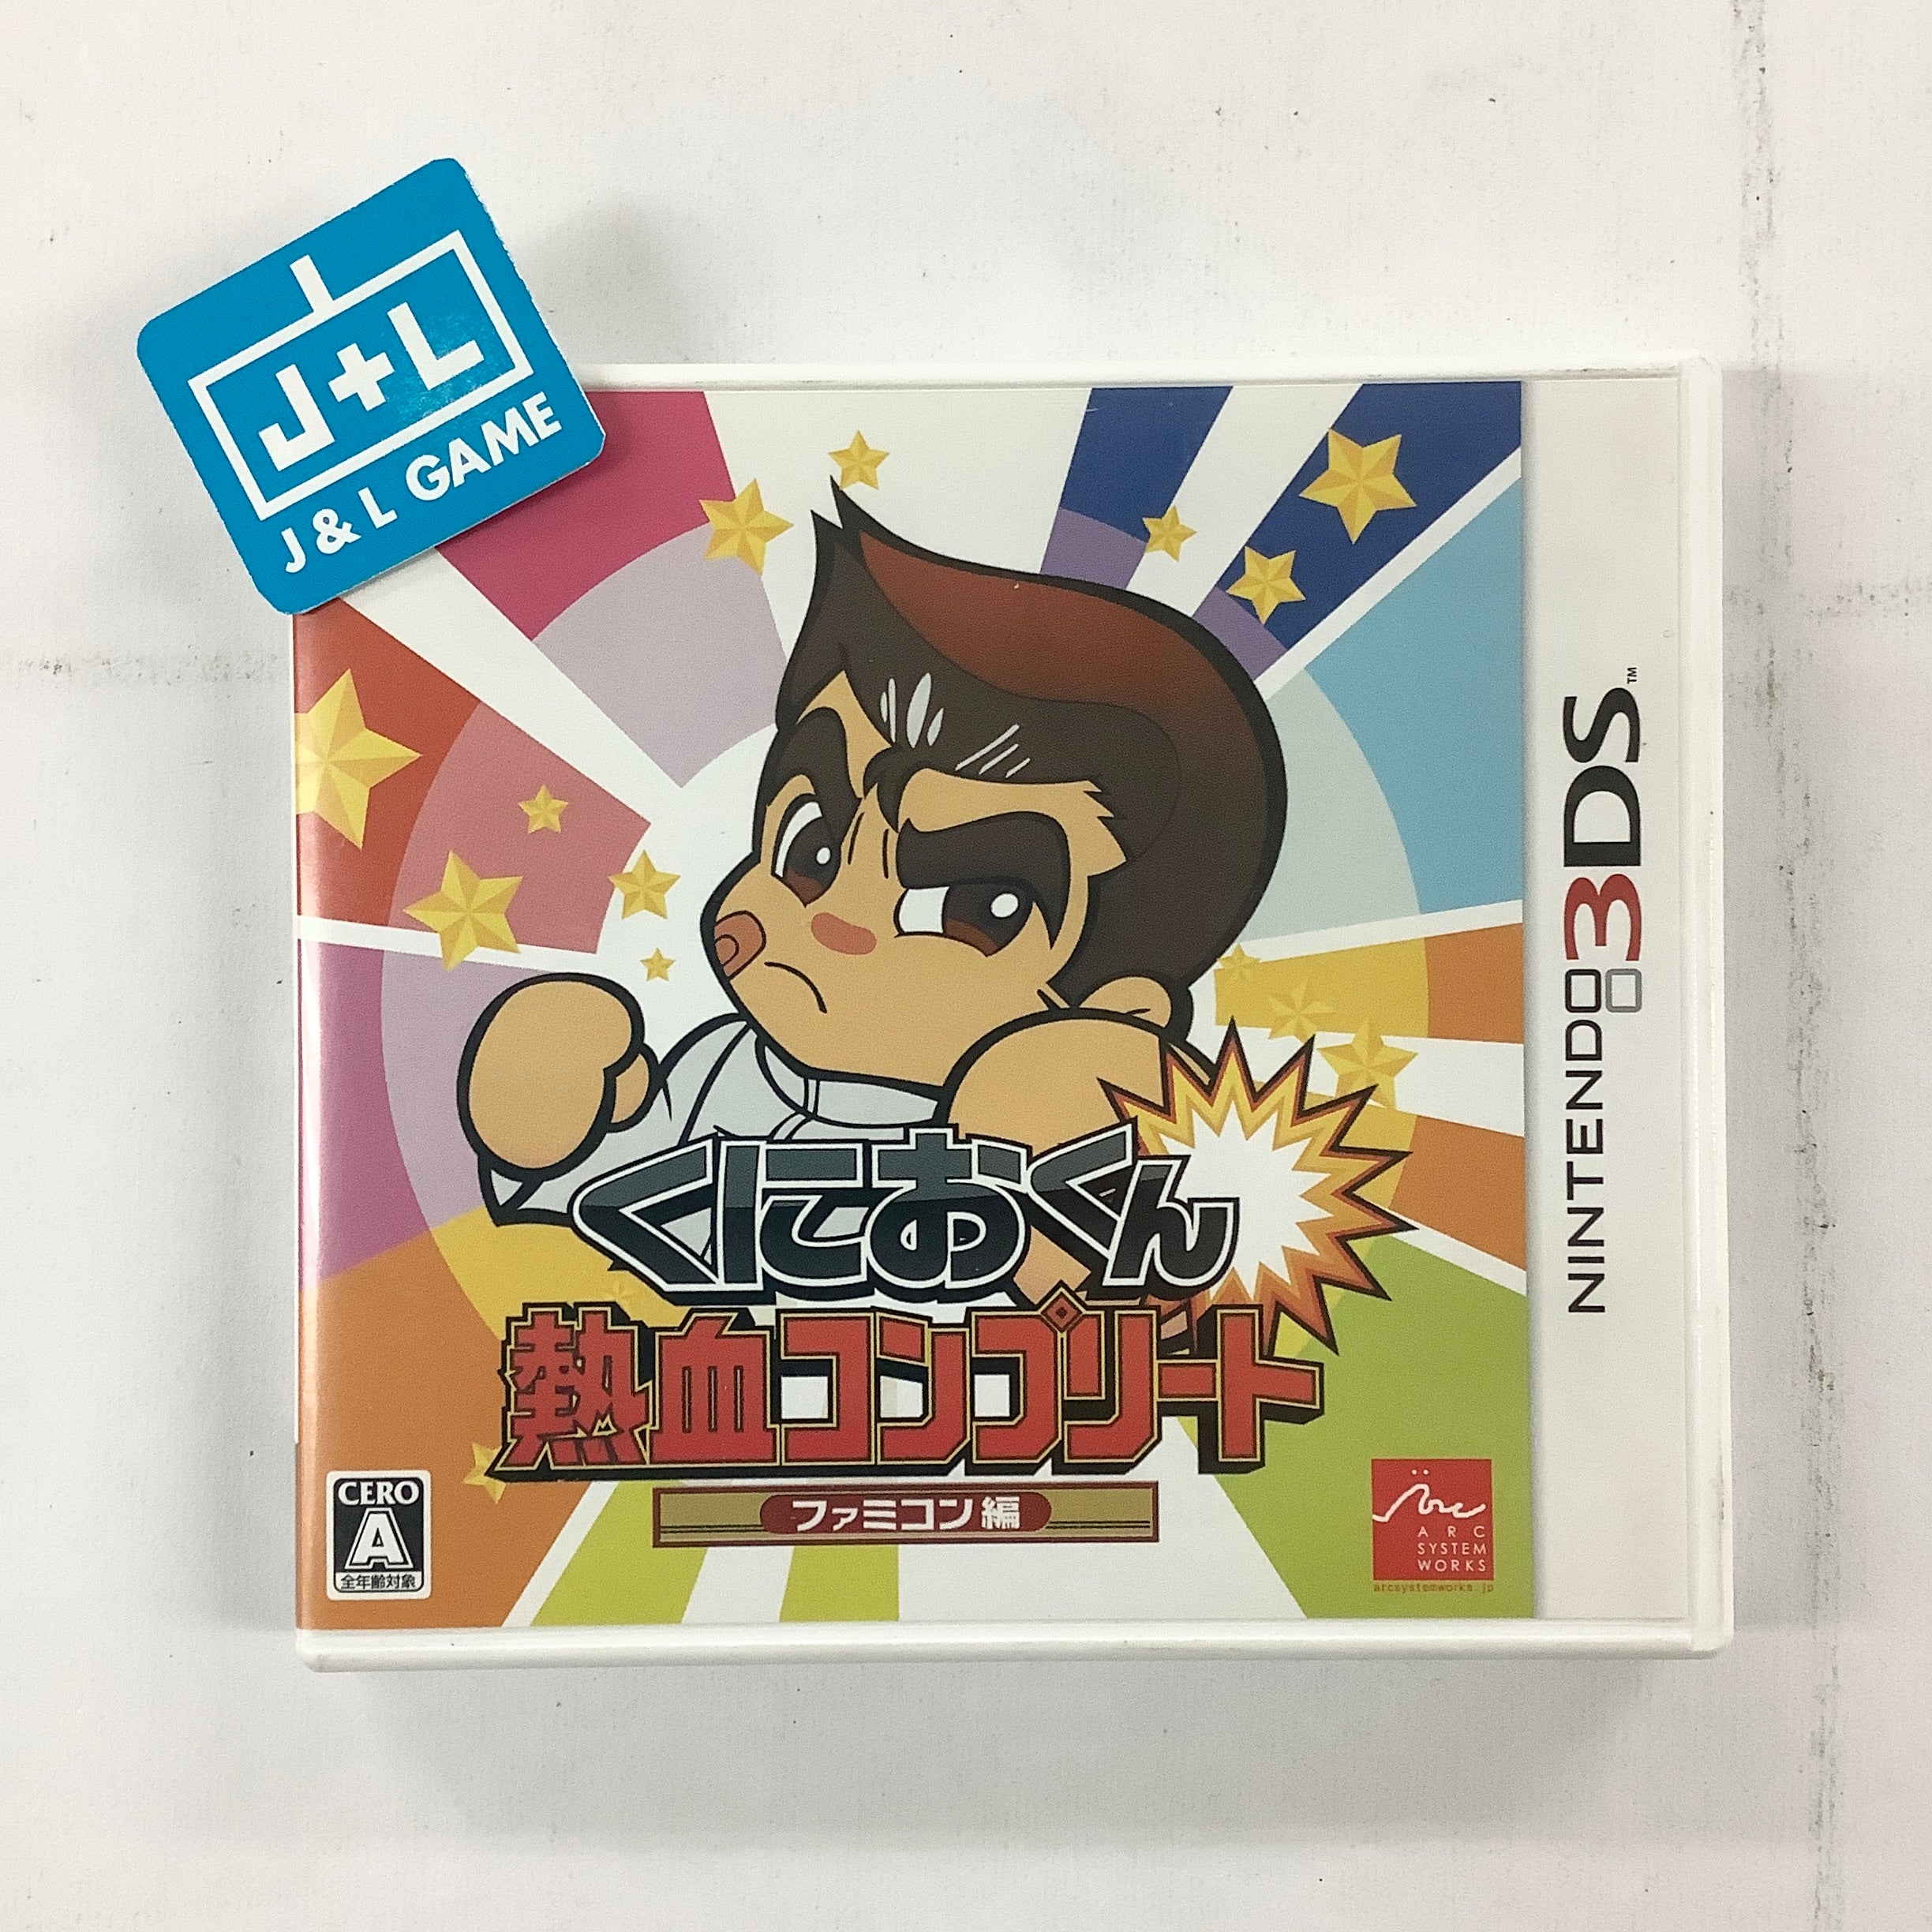 Kunio-kun Nekketsu Complete: Famicom-Hen - Nintendo 3DS [Pre-Owned] (Japanese Import) Video Games Arc System Works   